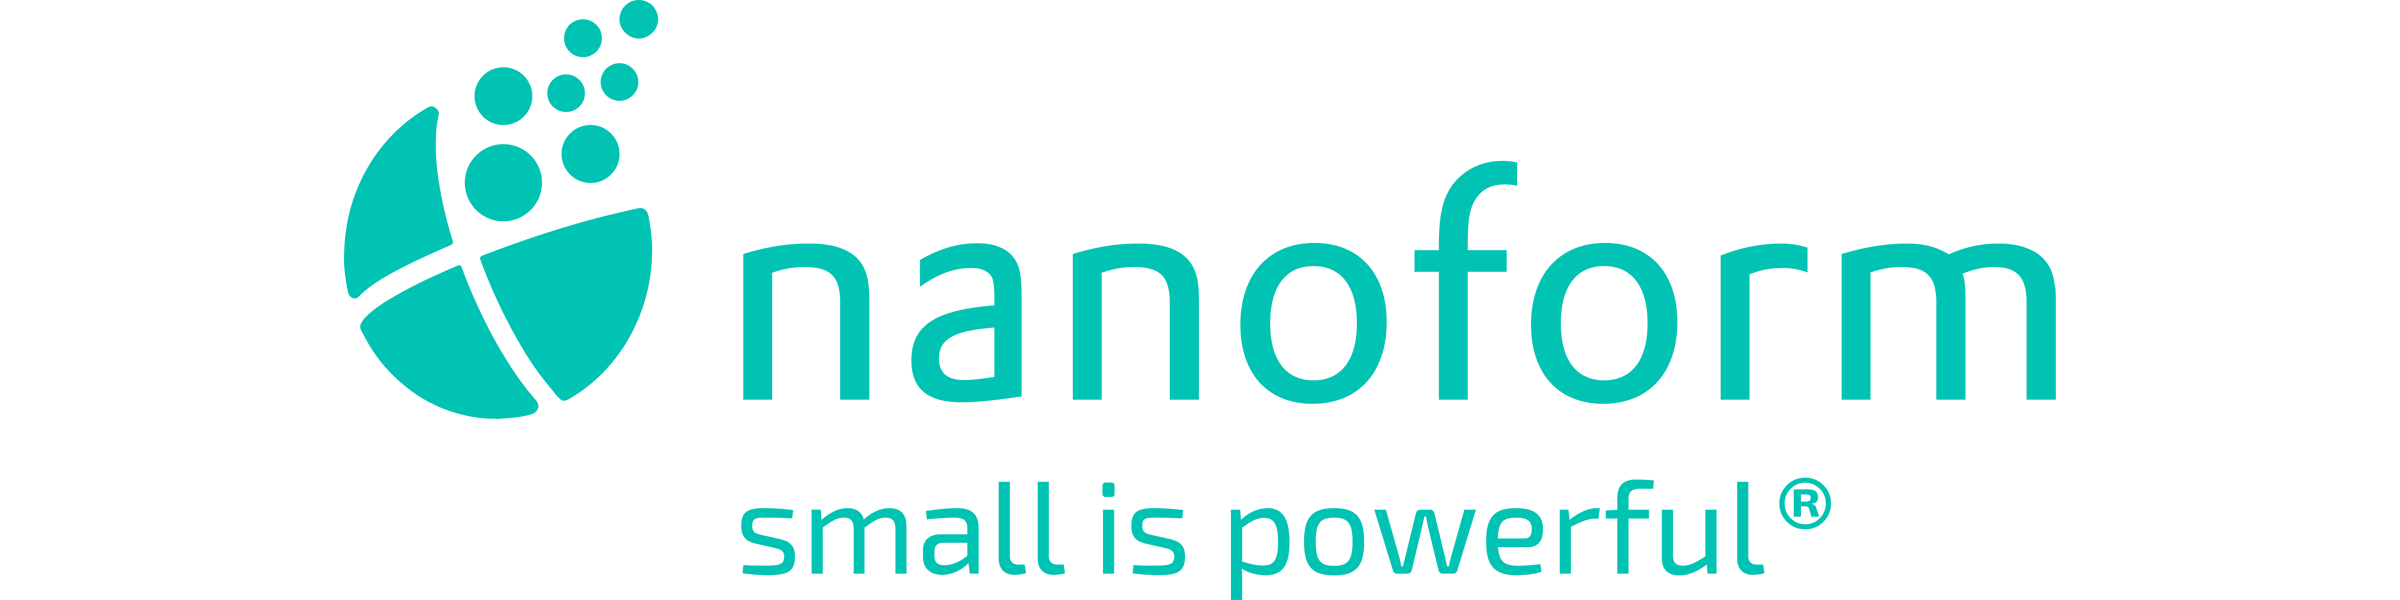 Nanoform brochure